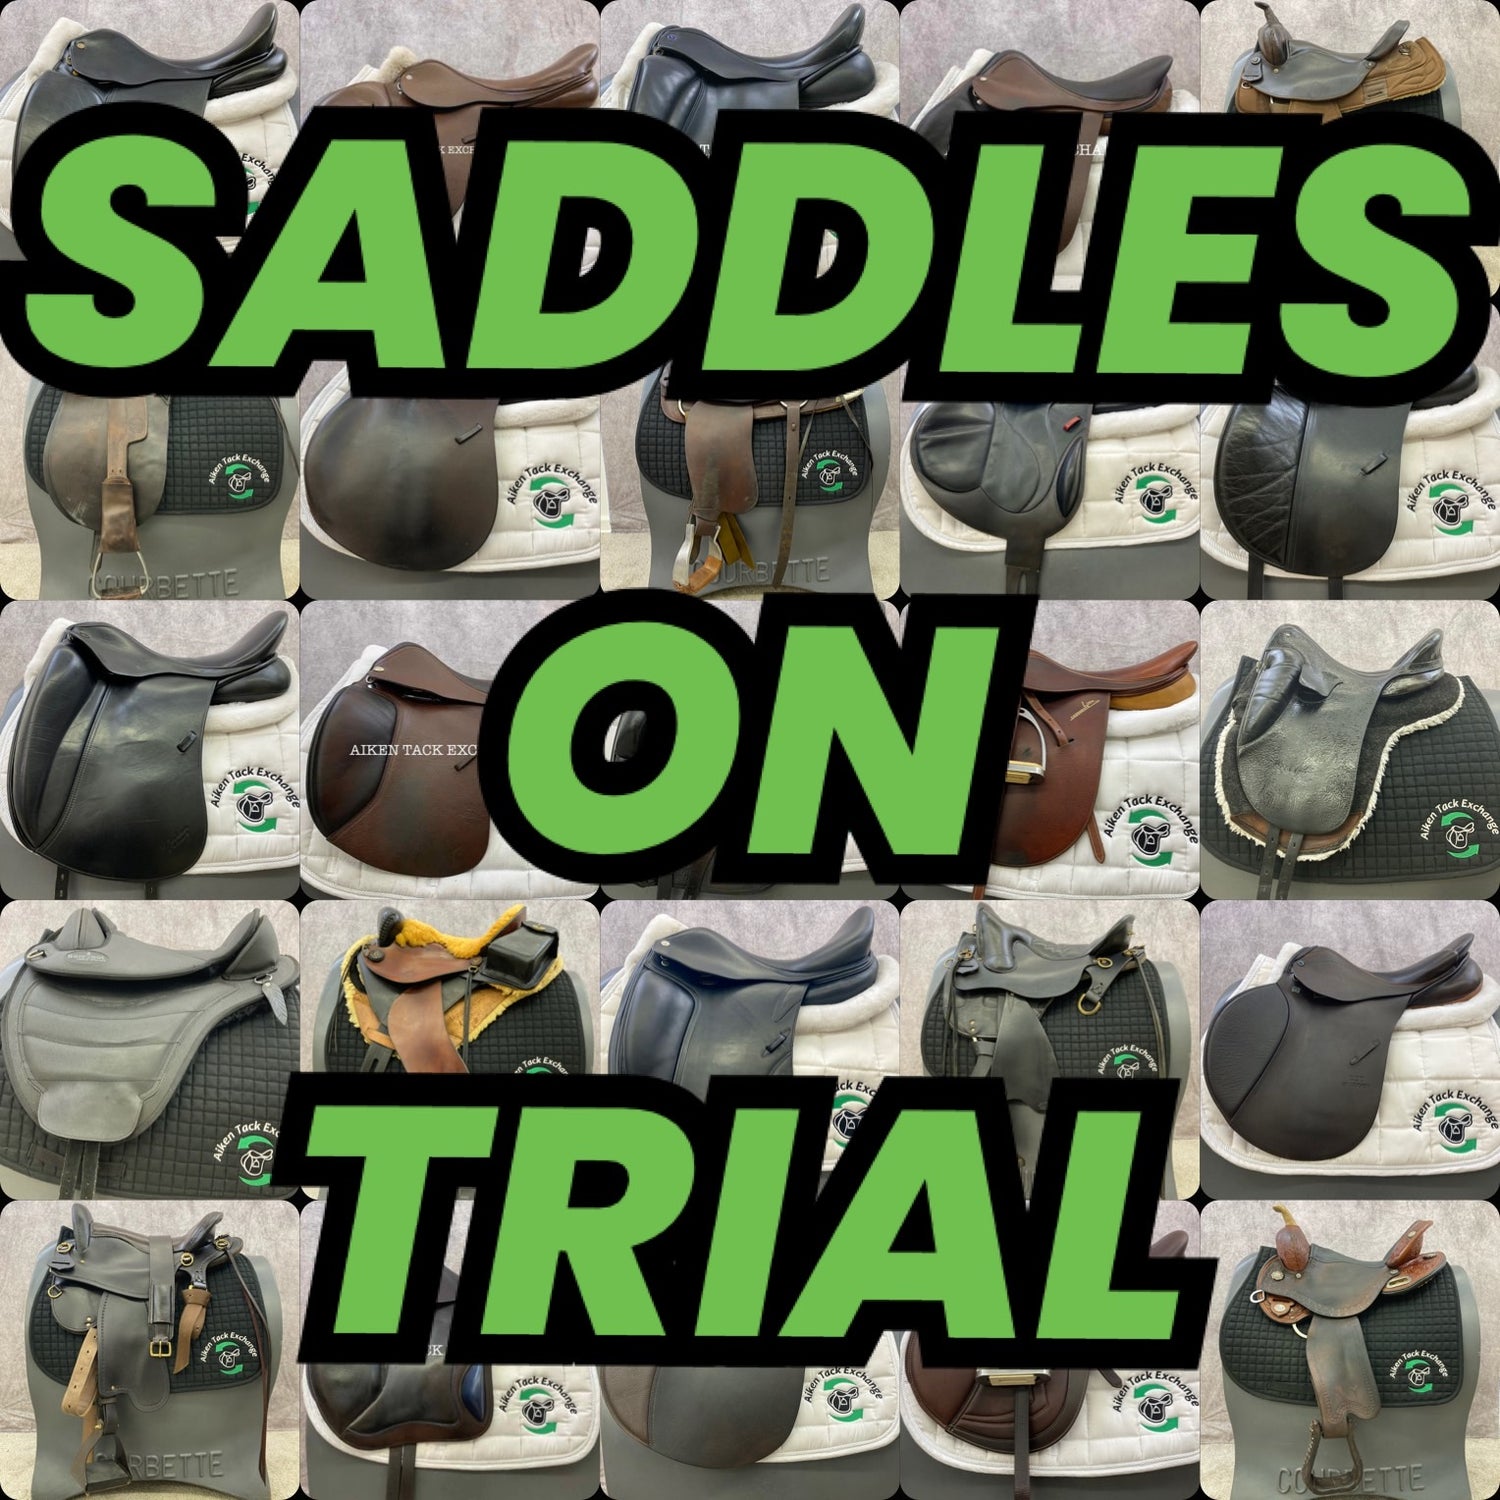 Saddles on Trial